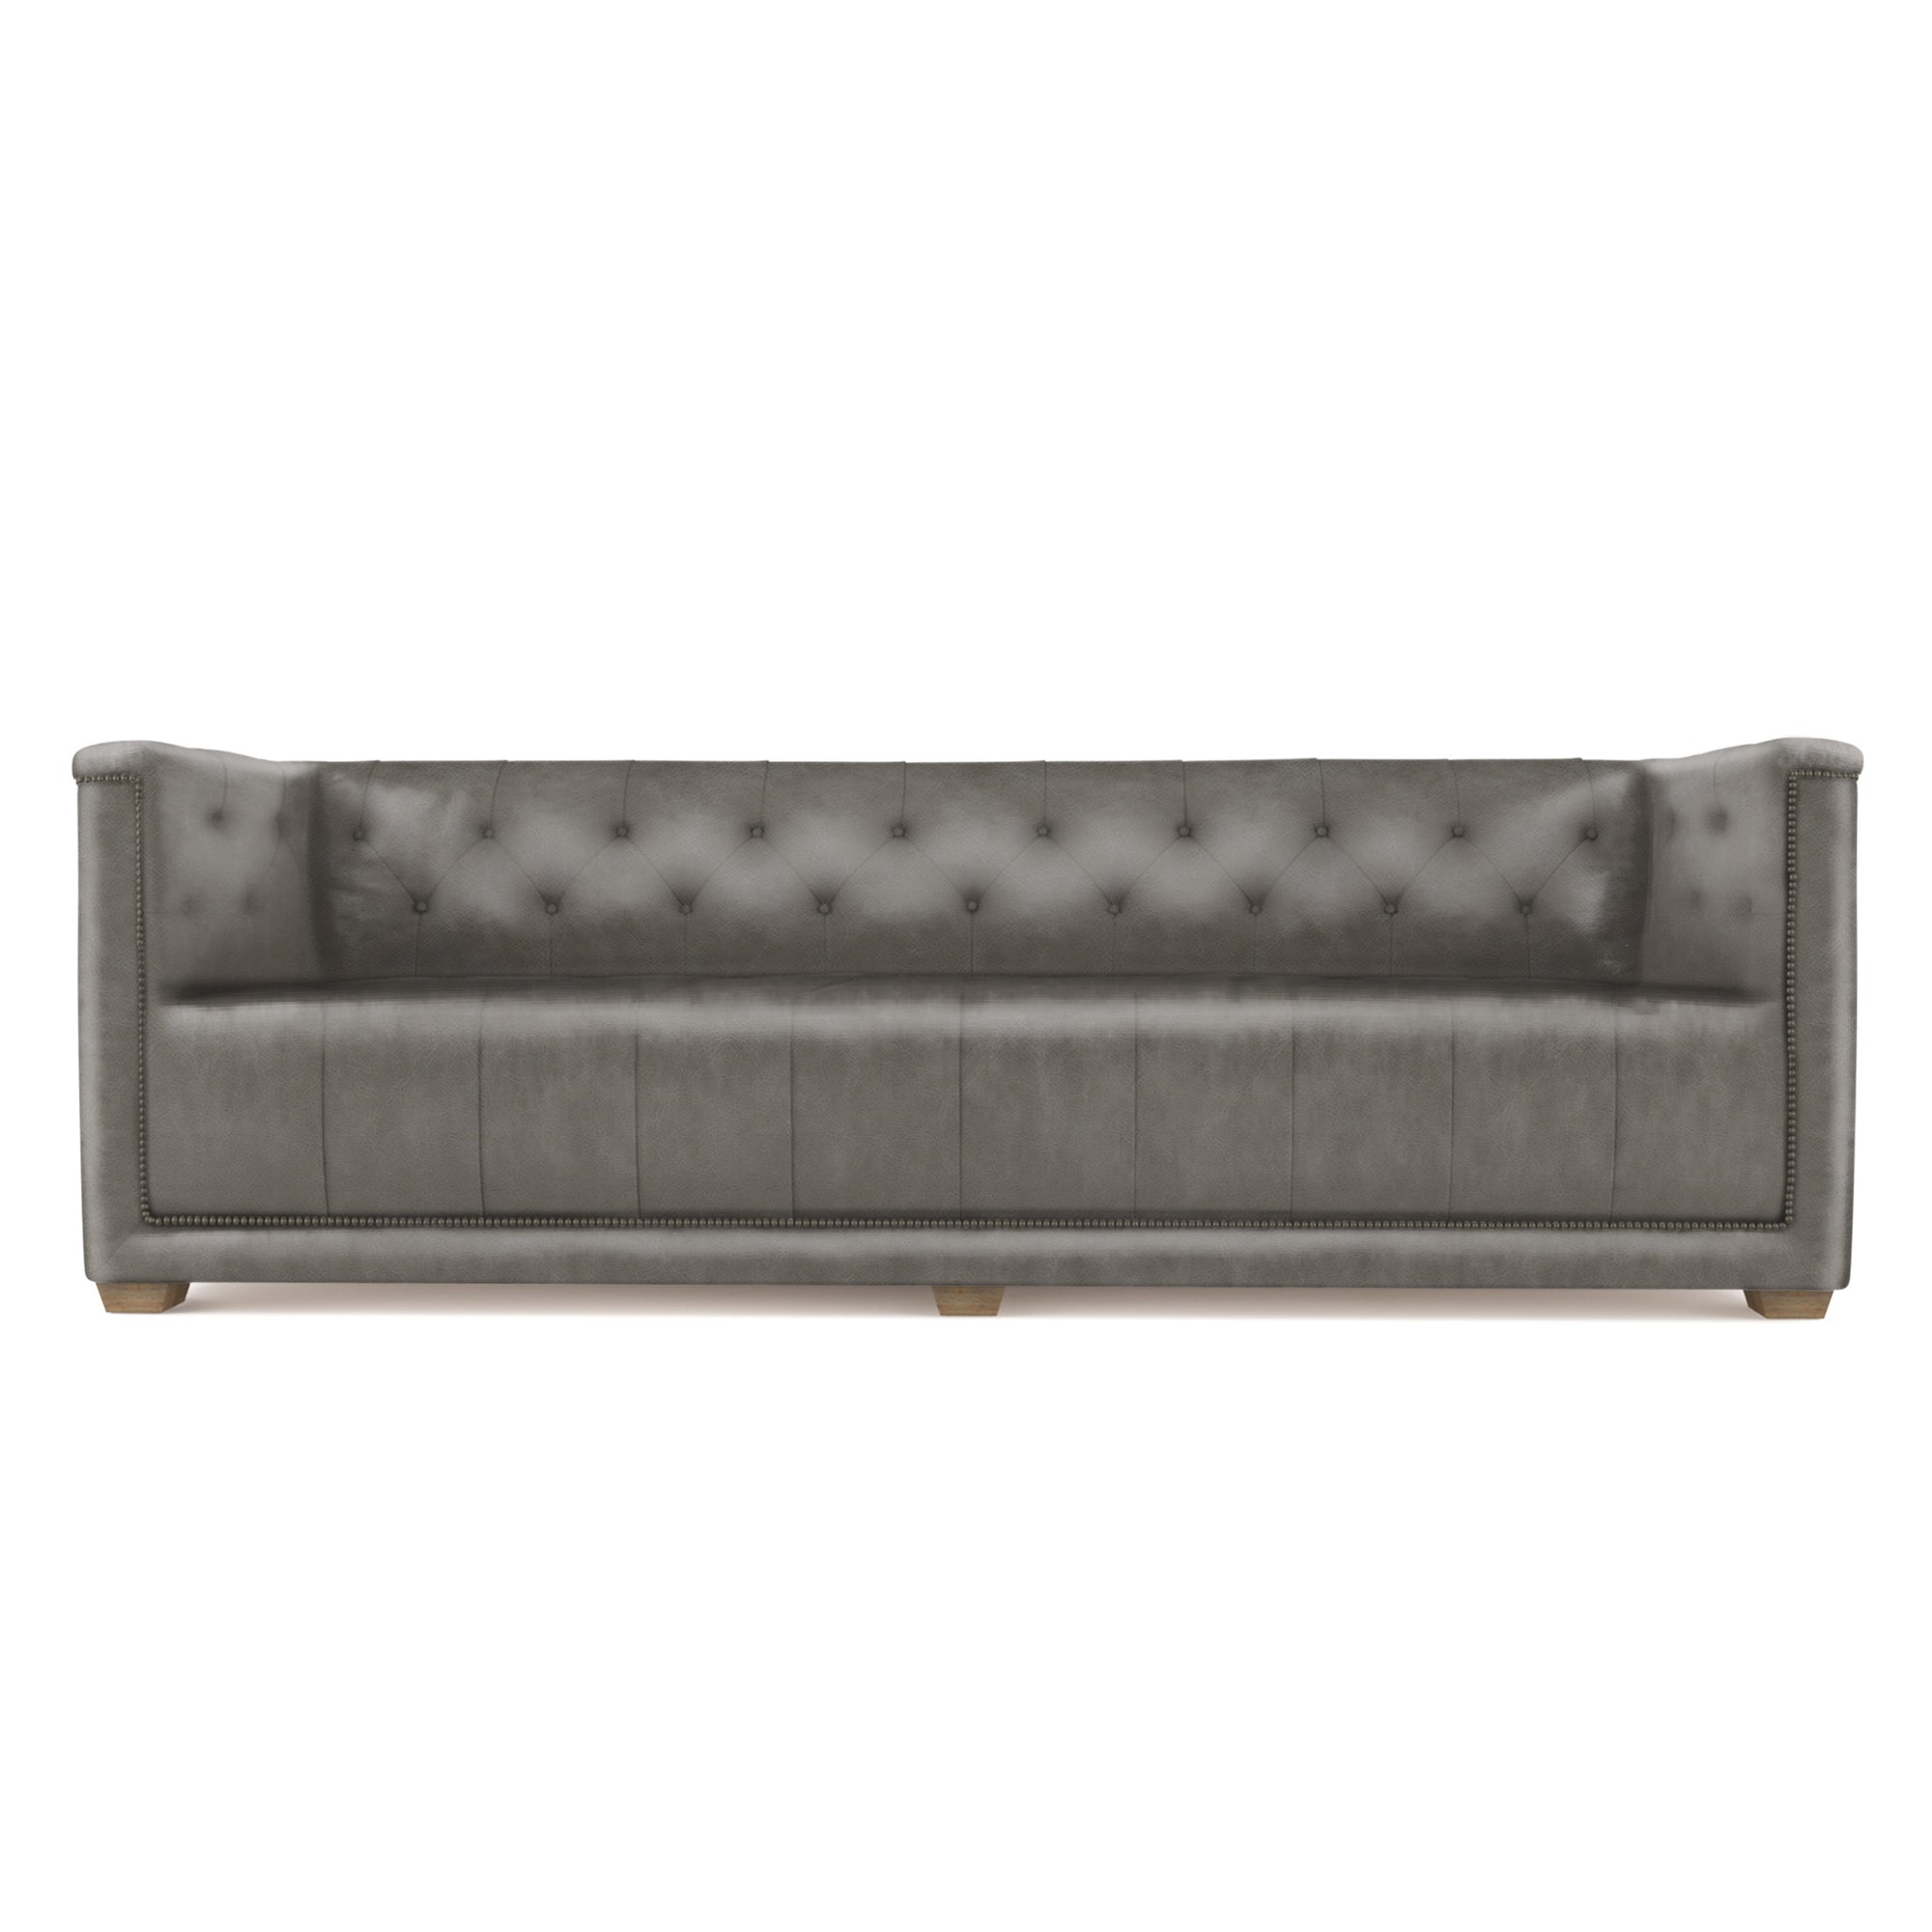 Hudson Sofa - Pumice Vintage Leather